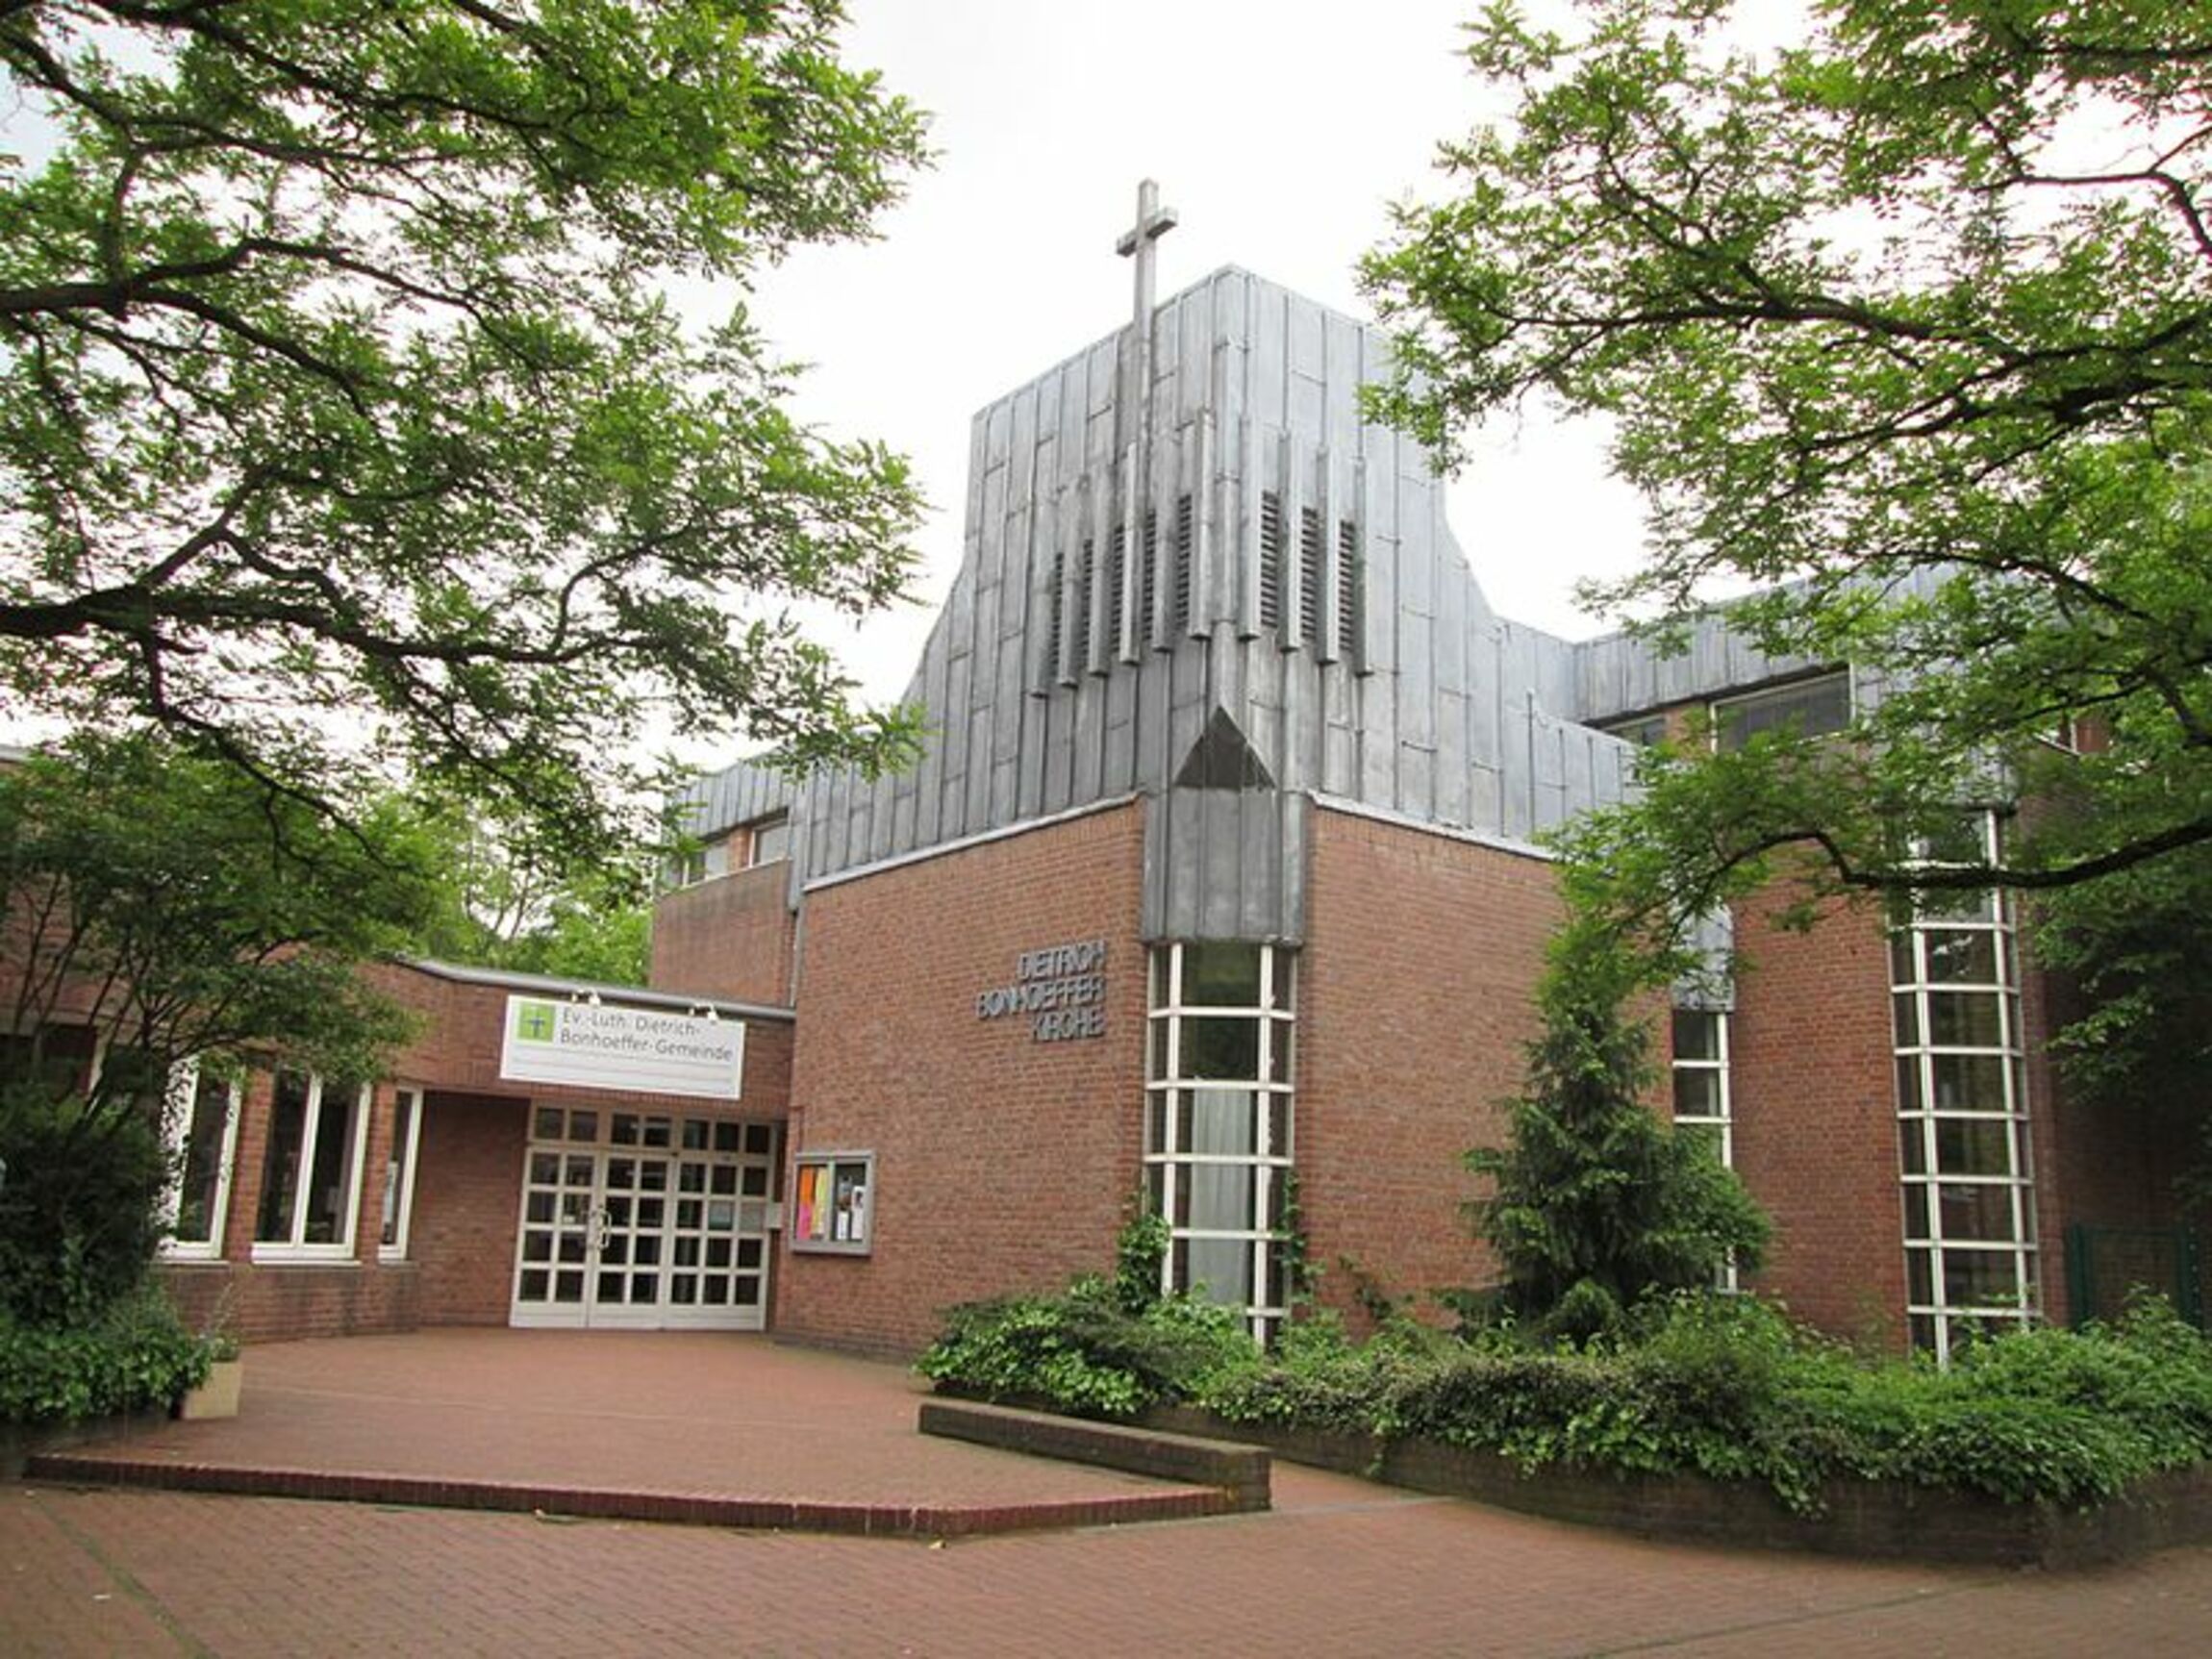 Dietrich-Bonhoeffer-Kirche